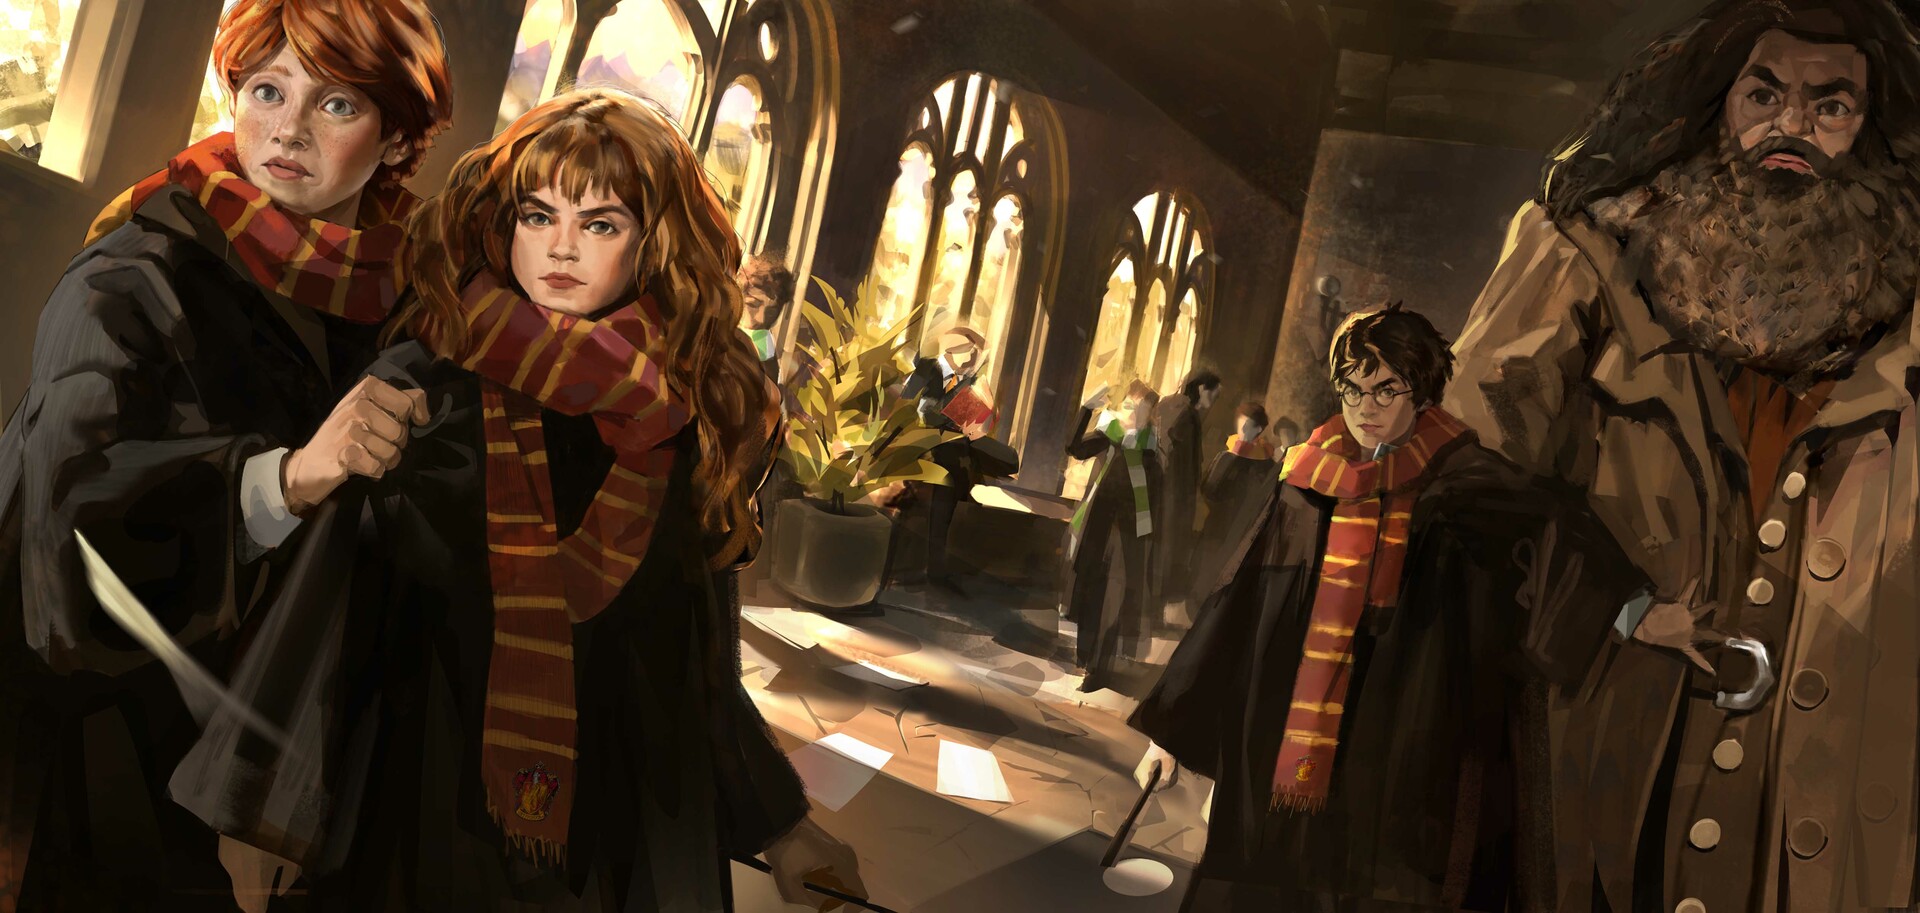 Fantasy Harry Potter Art by Thiago Richau